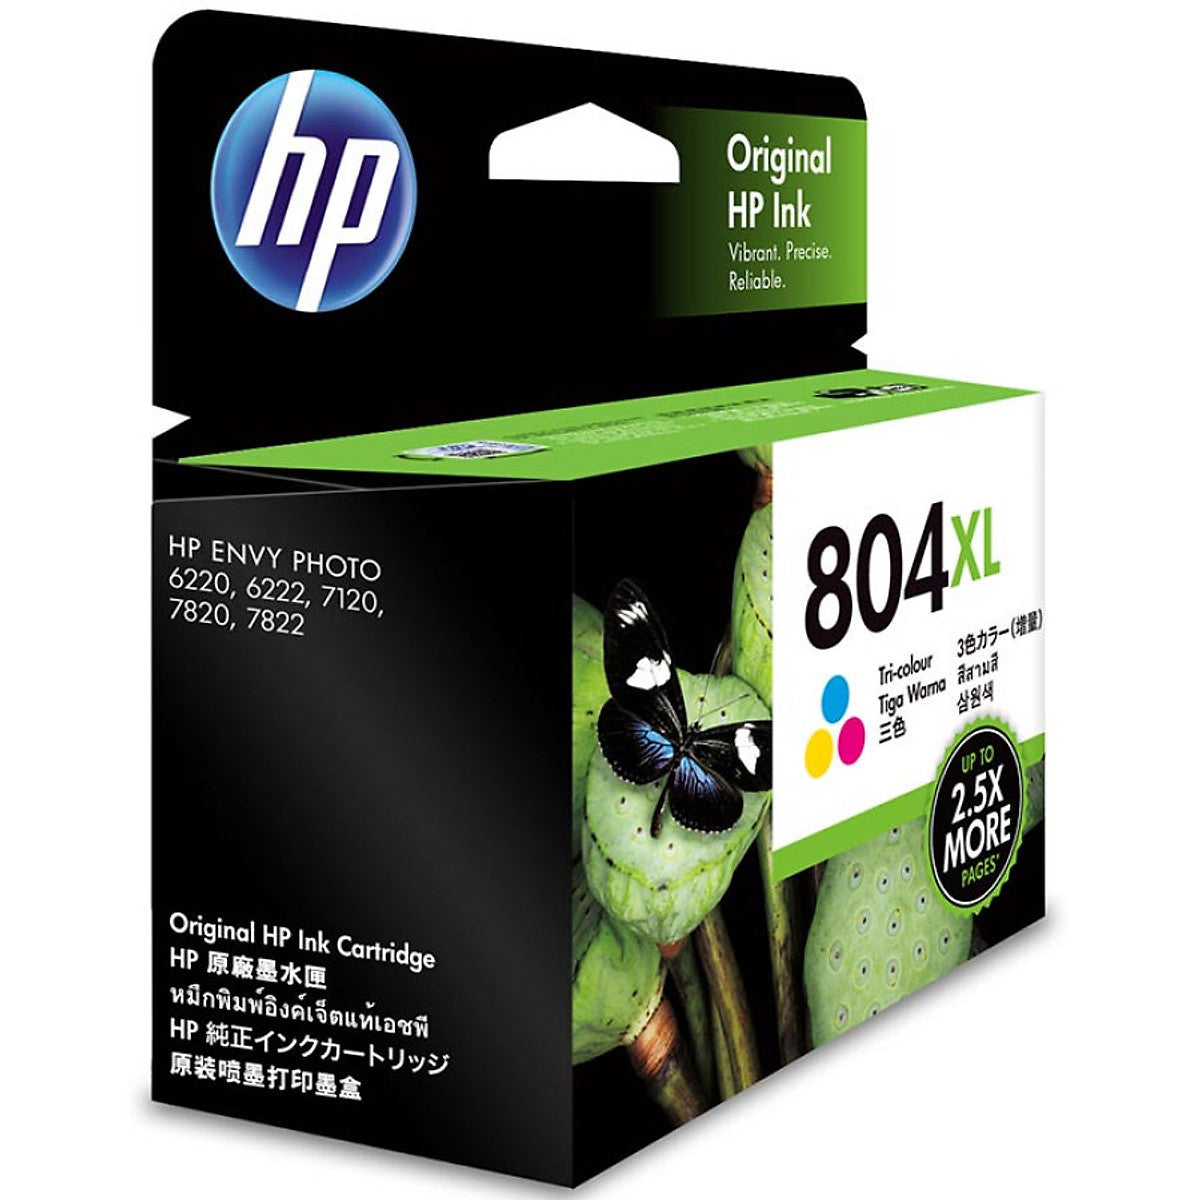 HP 804XL Ink Cartridge (Black/Color)